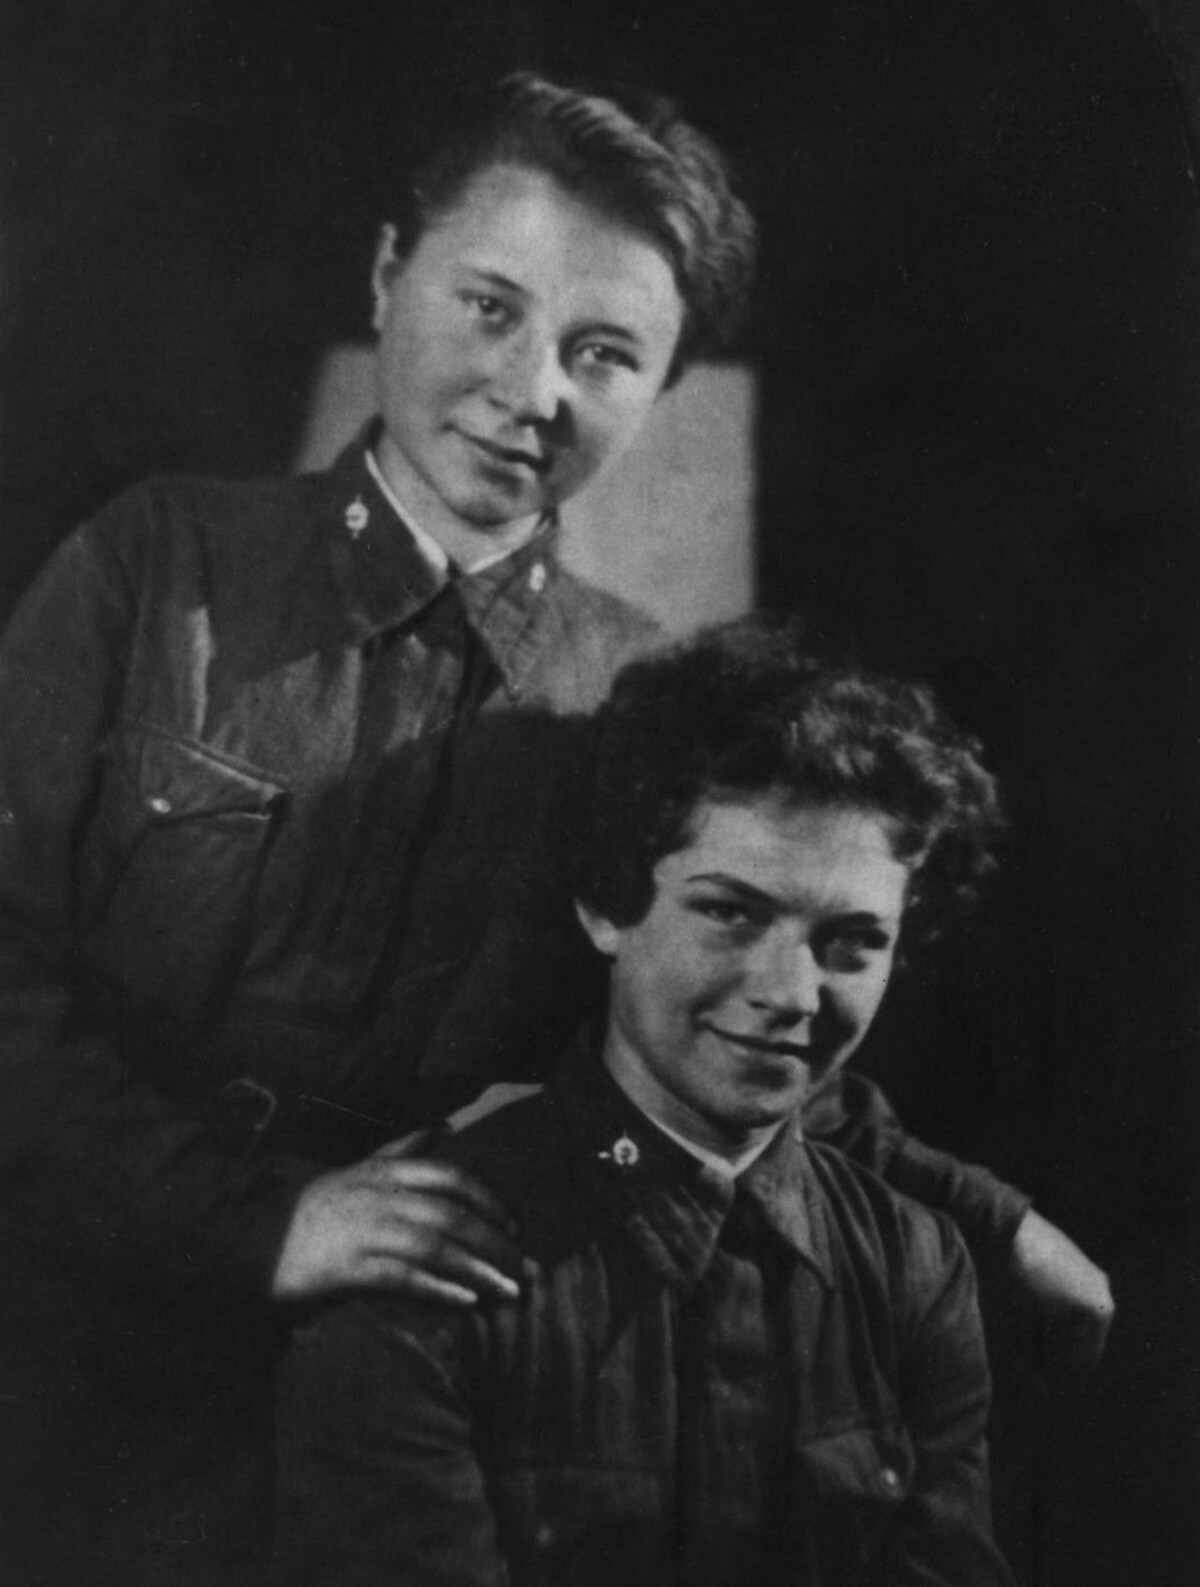 Н.Ковшова и М.Поливанова. Октябрь 1941 г.